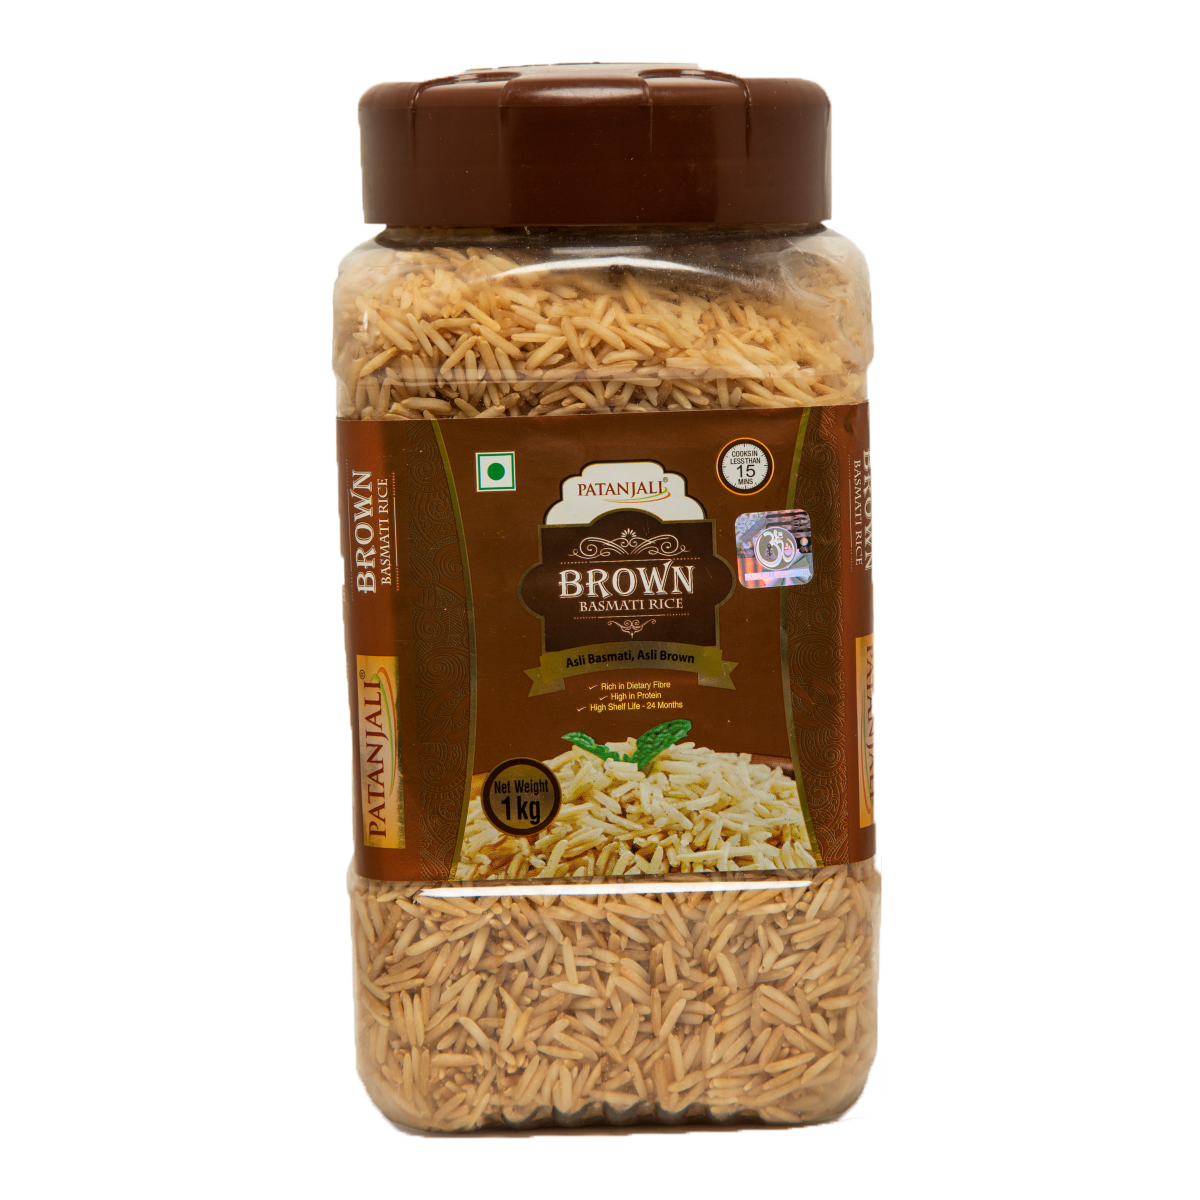 Patanjali Brown Basmati Rice Jar